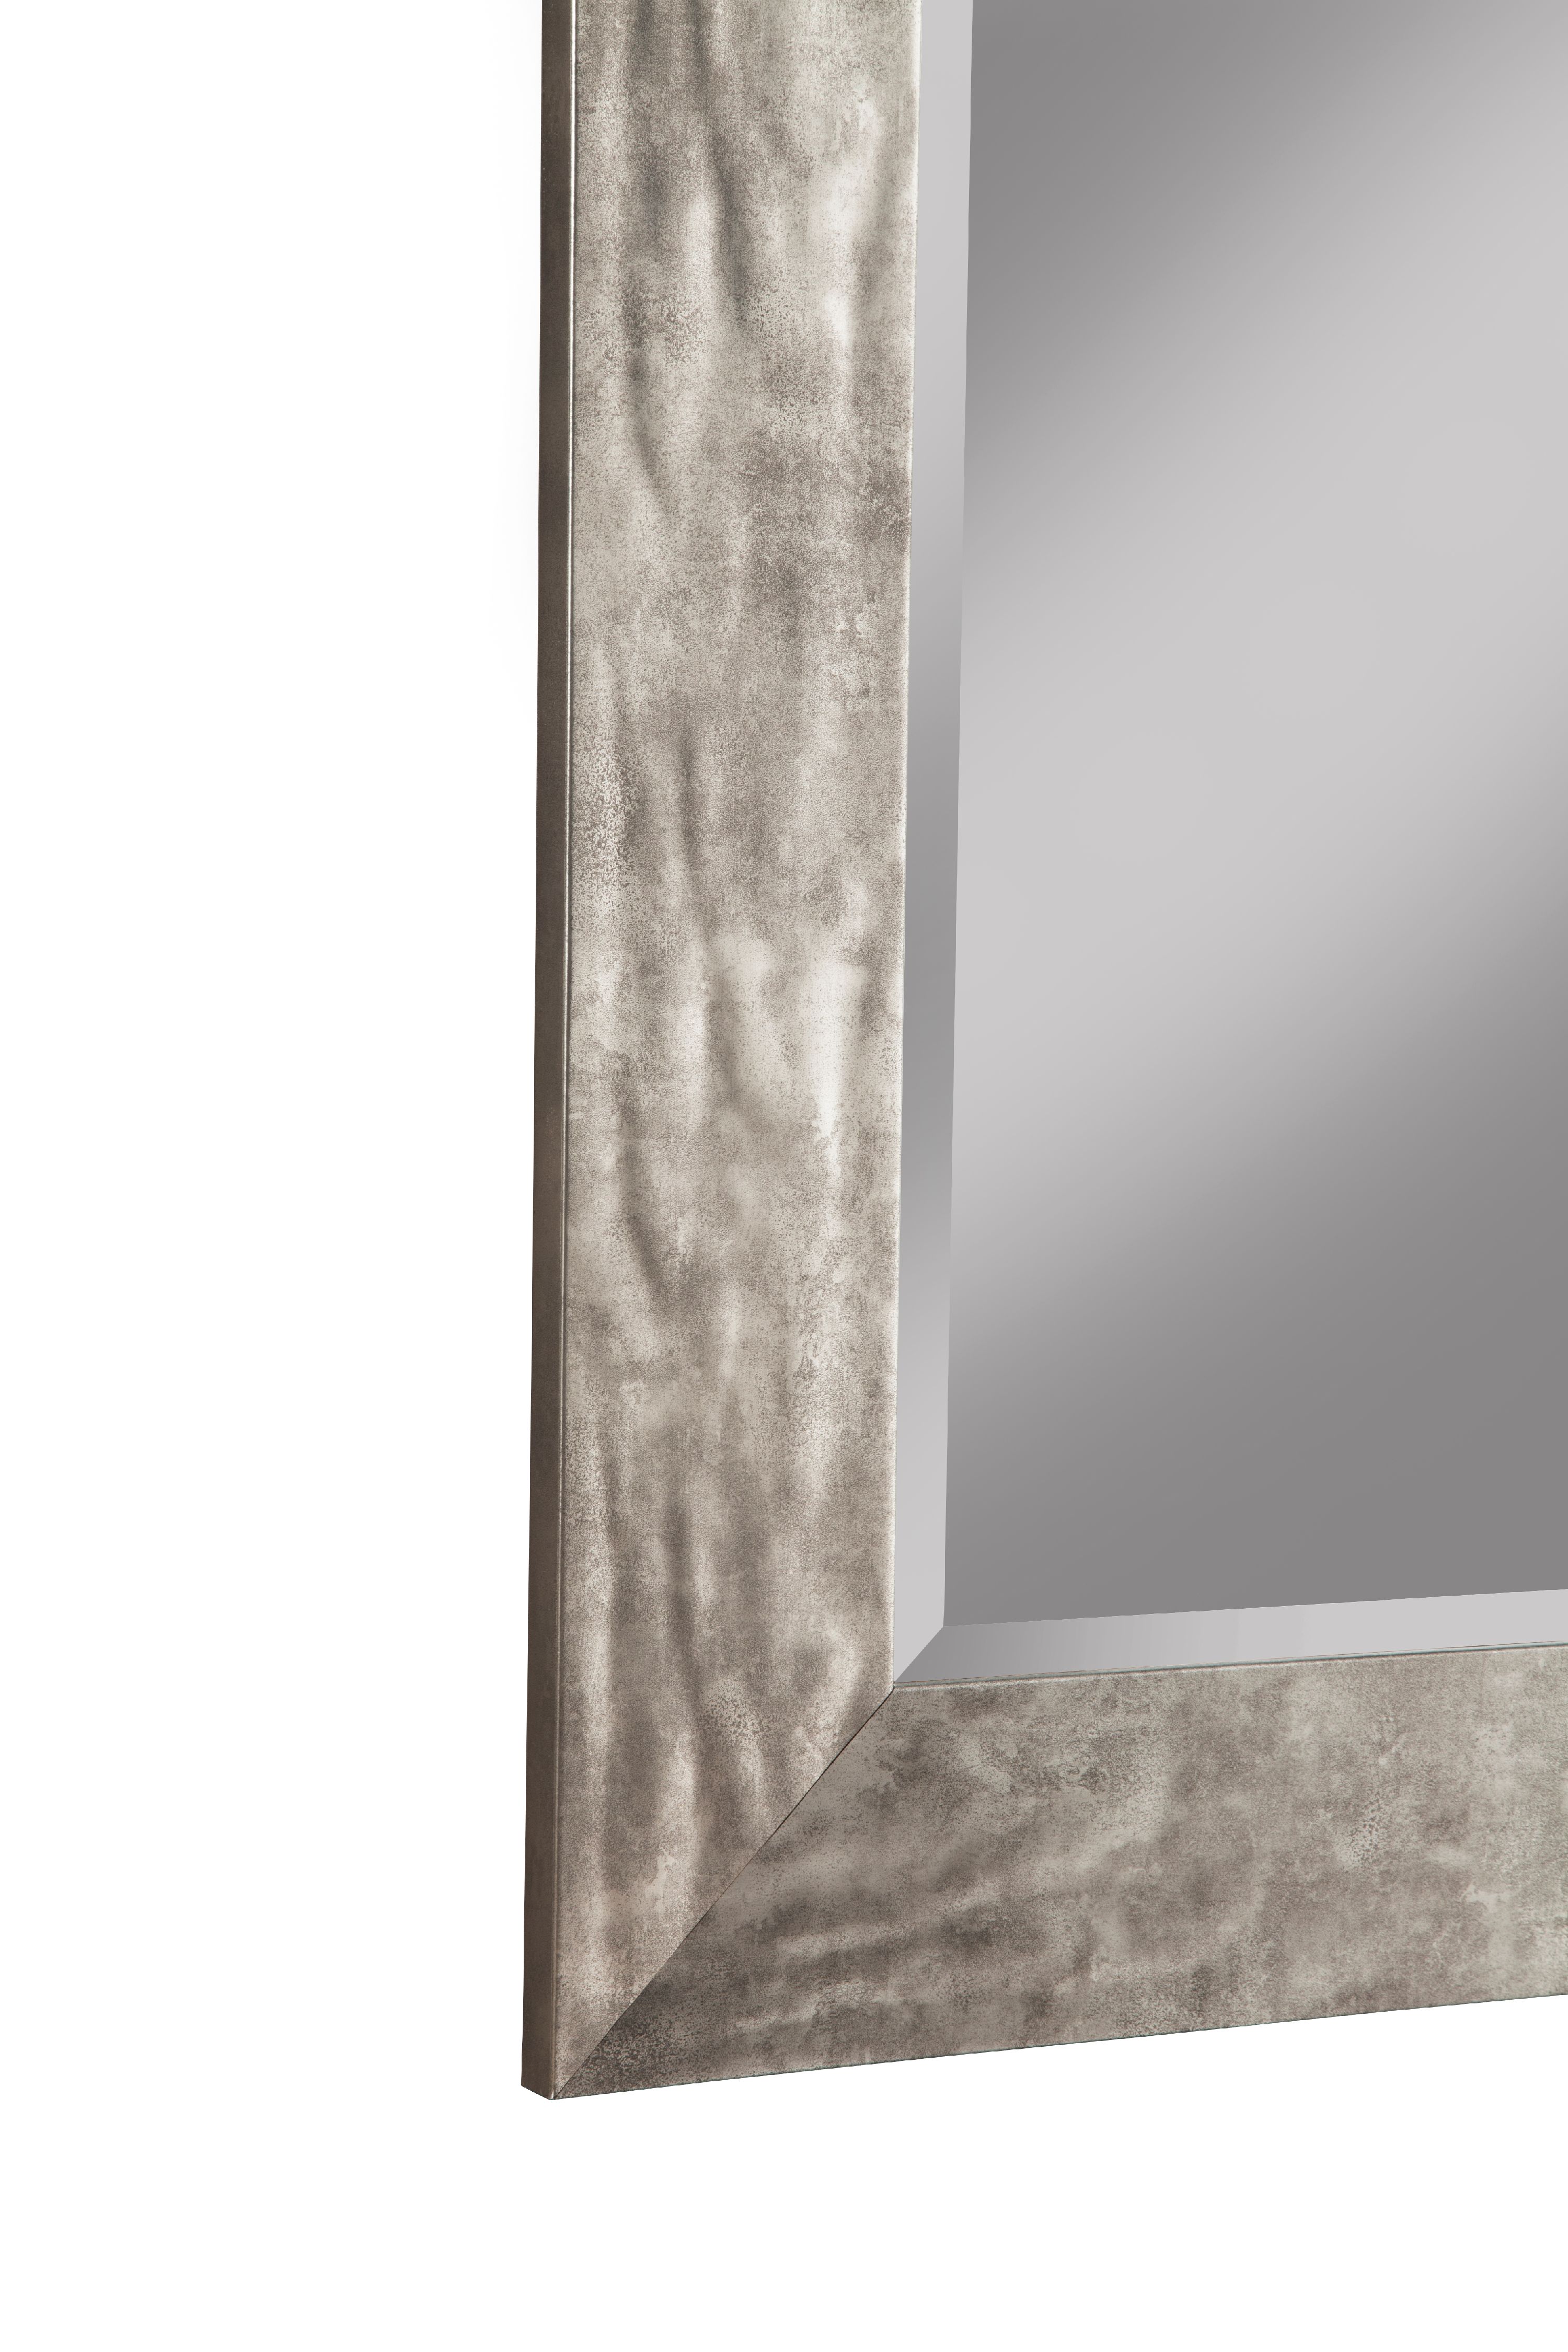 Sandberg Furniture Hammered Metal Full Length Floor Mirror - 31W x 65H in. - image 3 of 7